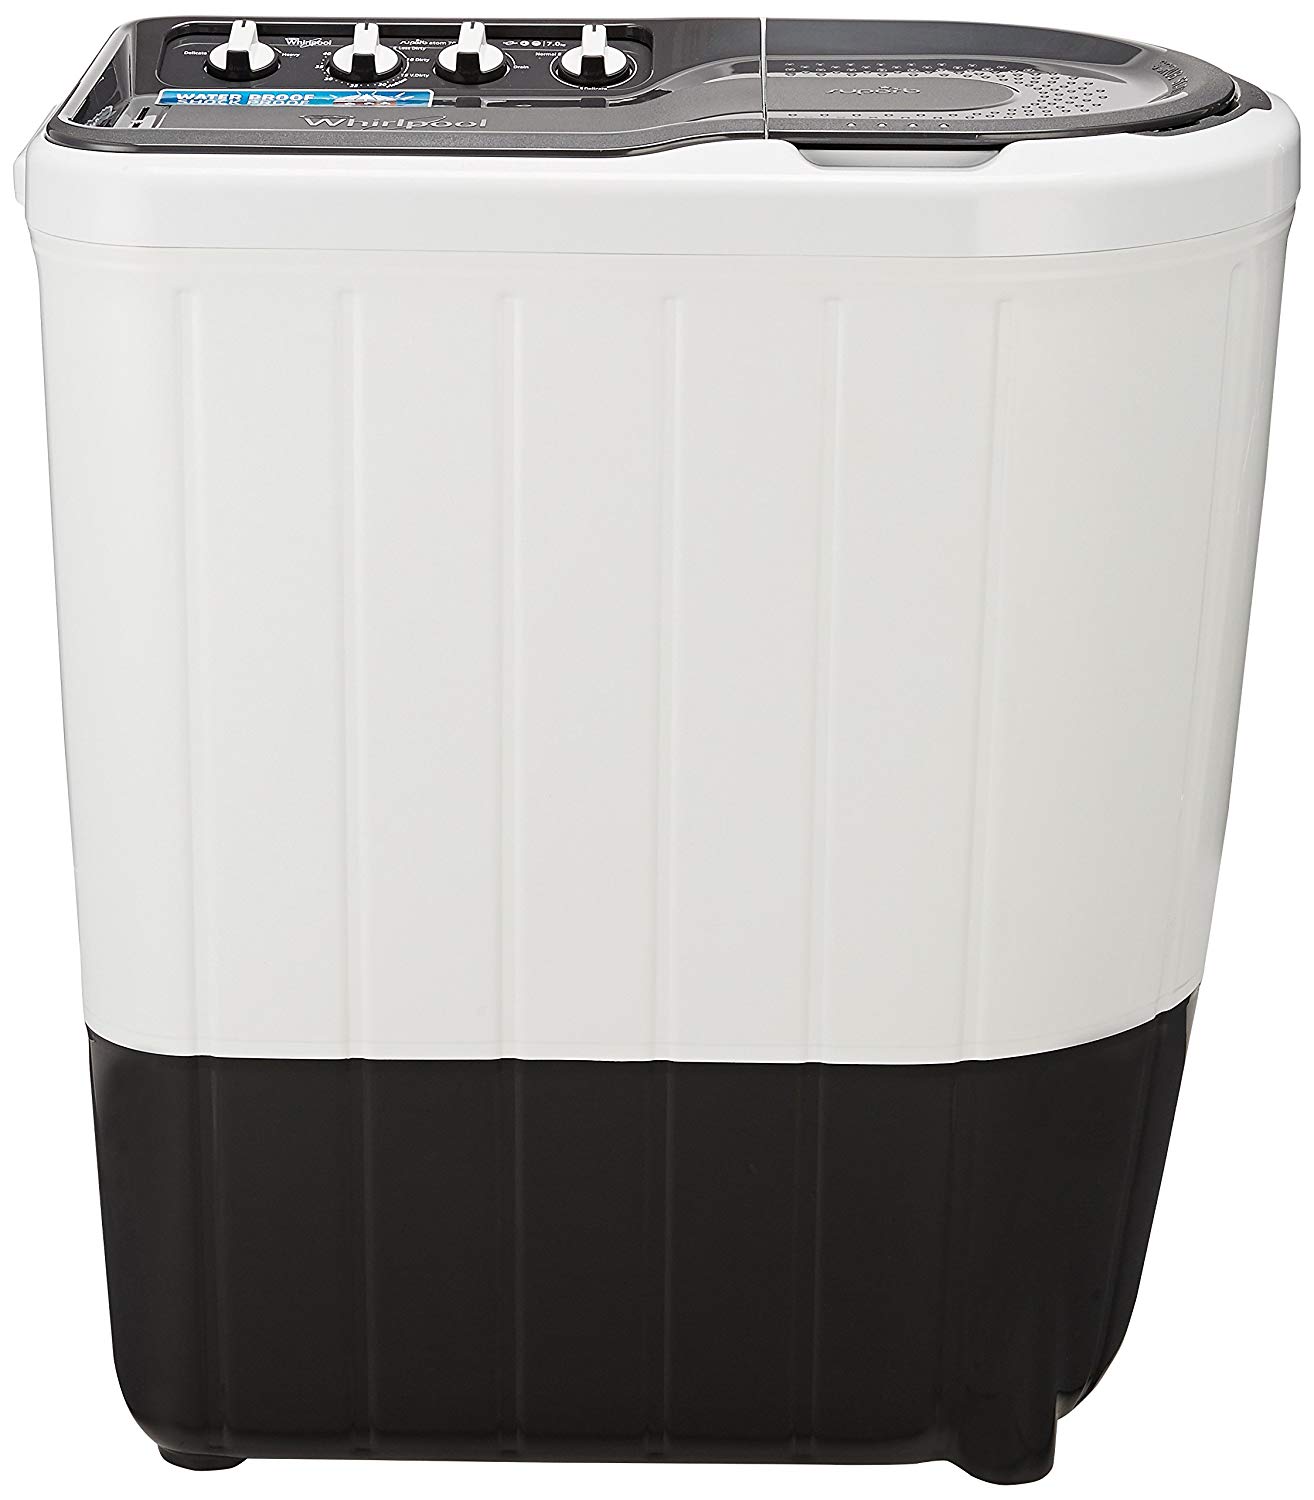 Whirlpool 7 Kg 5 Star Semi-Automatic Top Loading Washing Machine